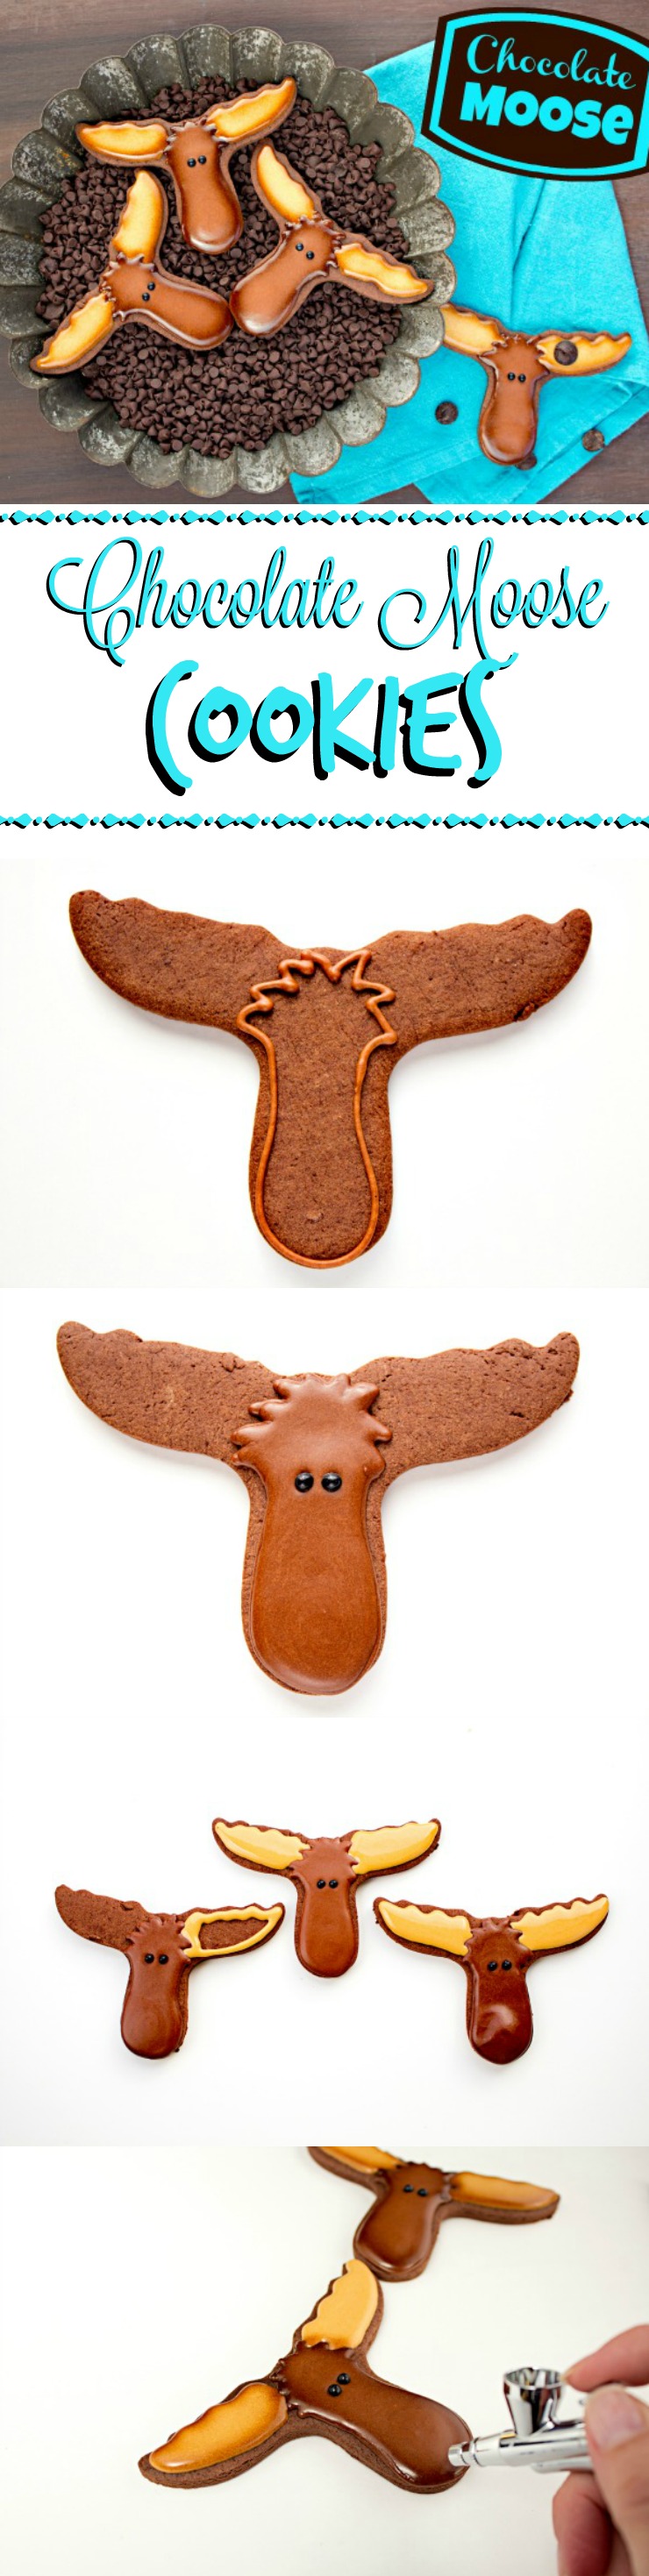 Chocolate moose Cookies | The Bearfoot Baker